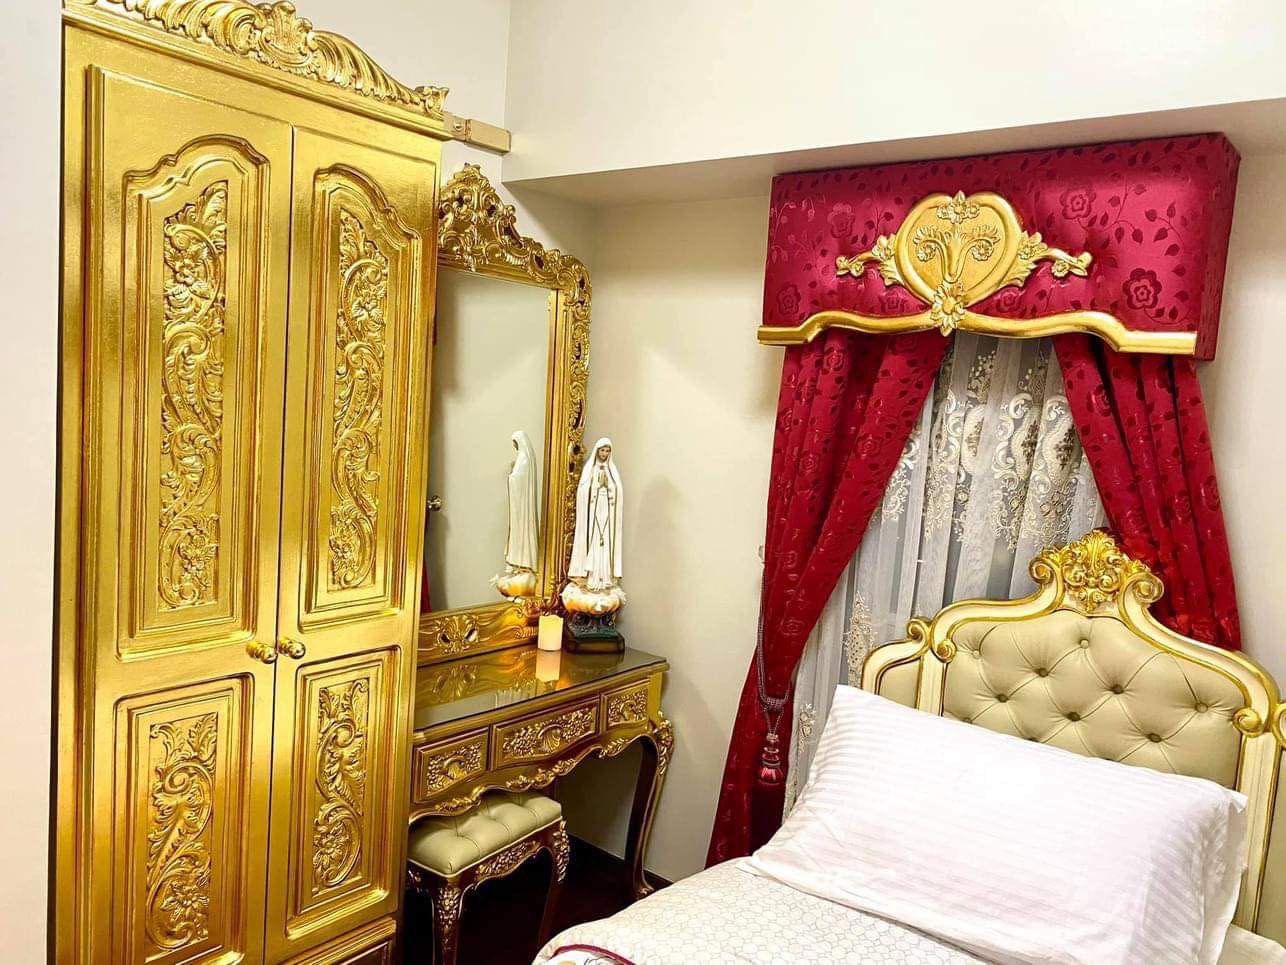 Enchanting2-BedroomCondoUnitforSaleinSheridanTowers,Pasig City-8.jpg